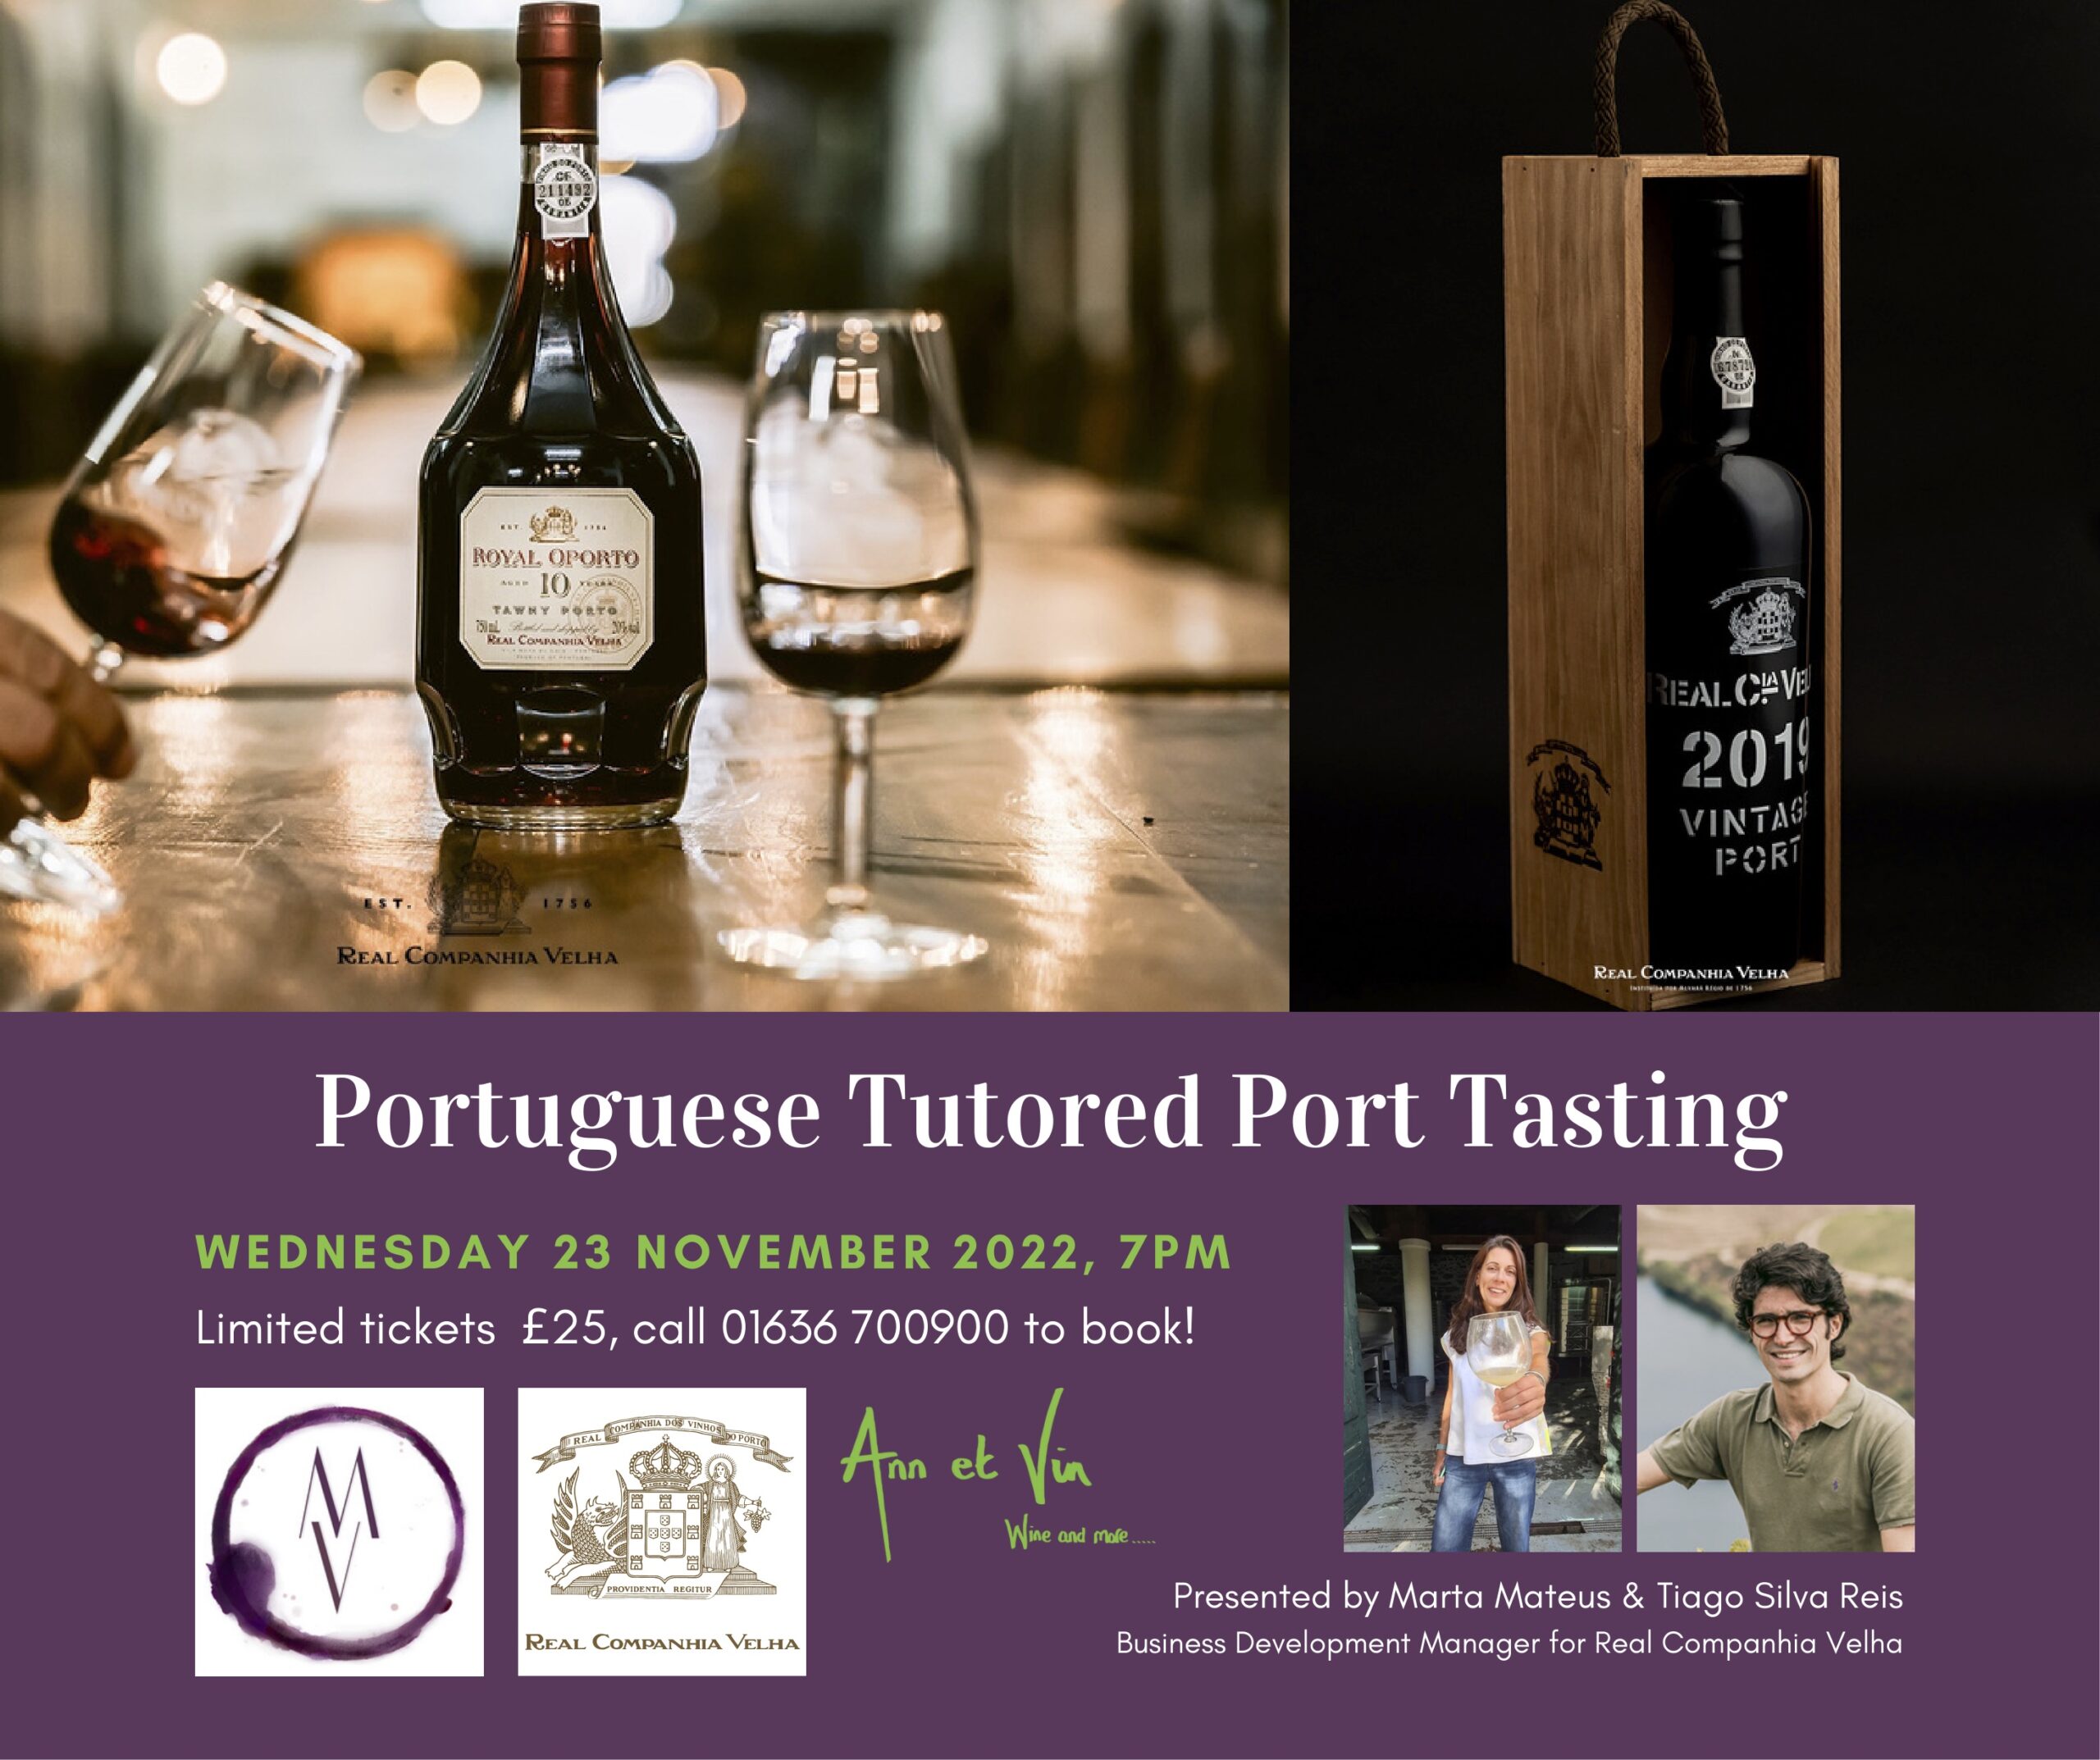 Portuguese Port Wine Tasting at Ann et Vin with Marta Vine